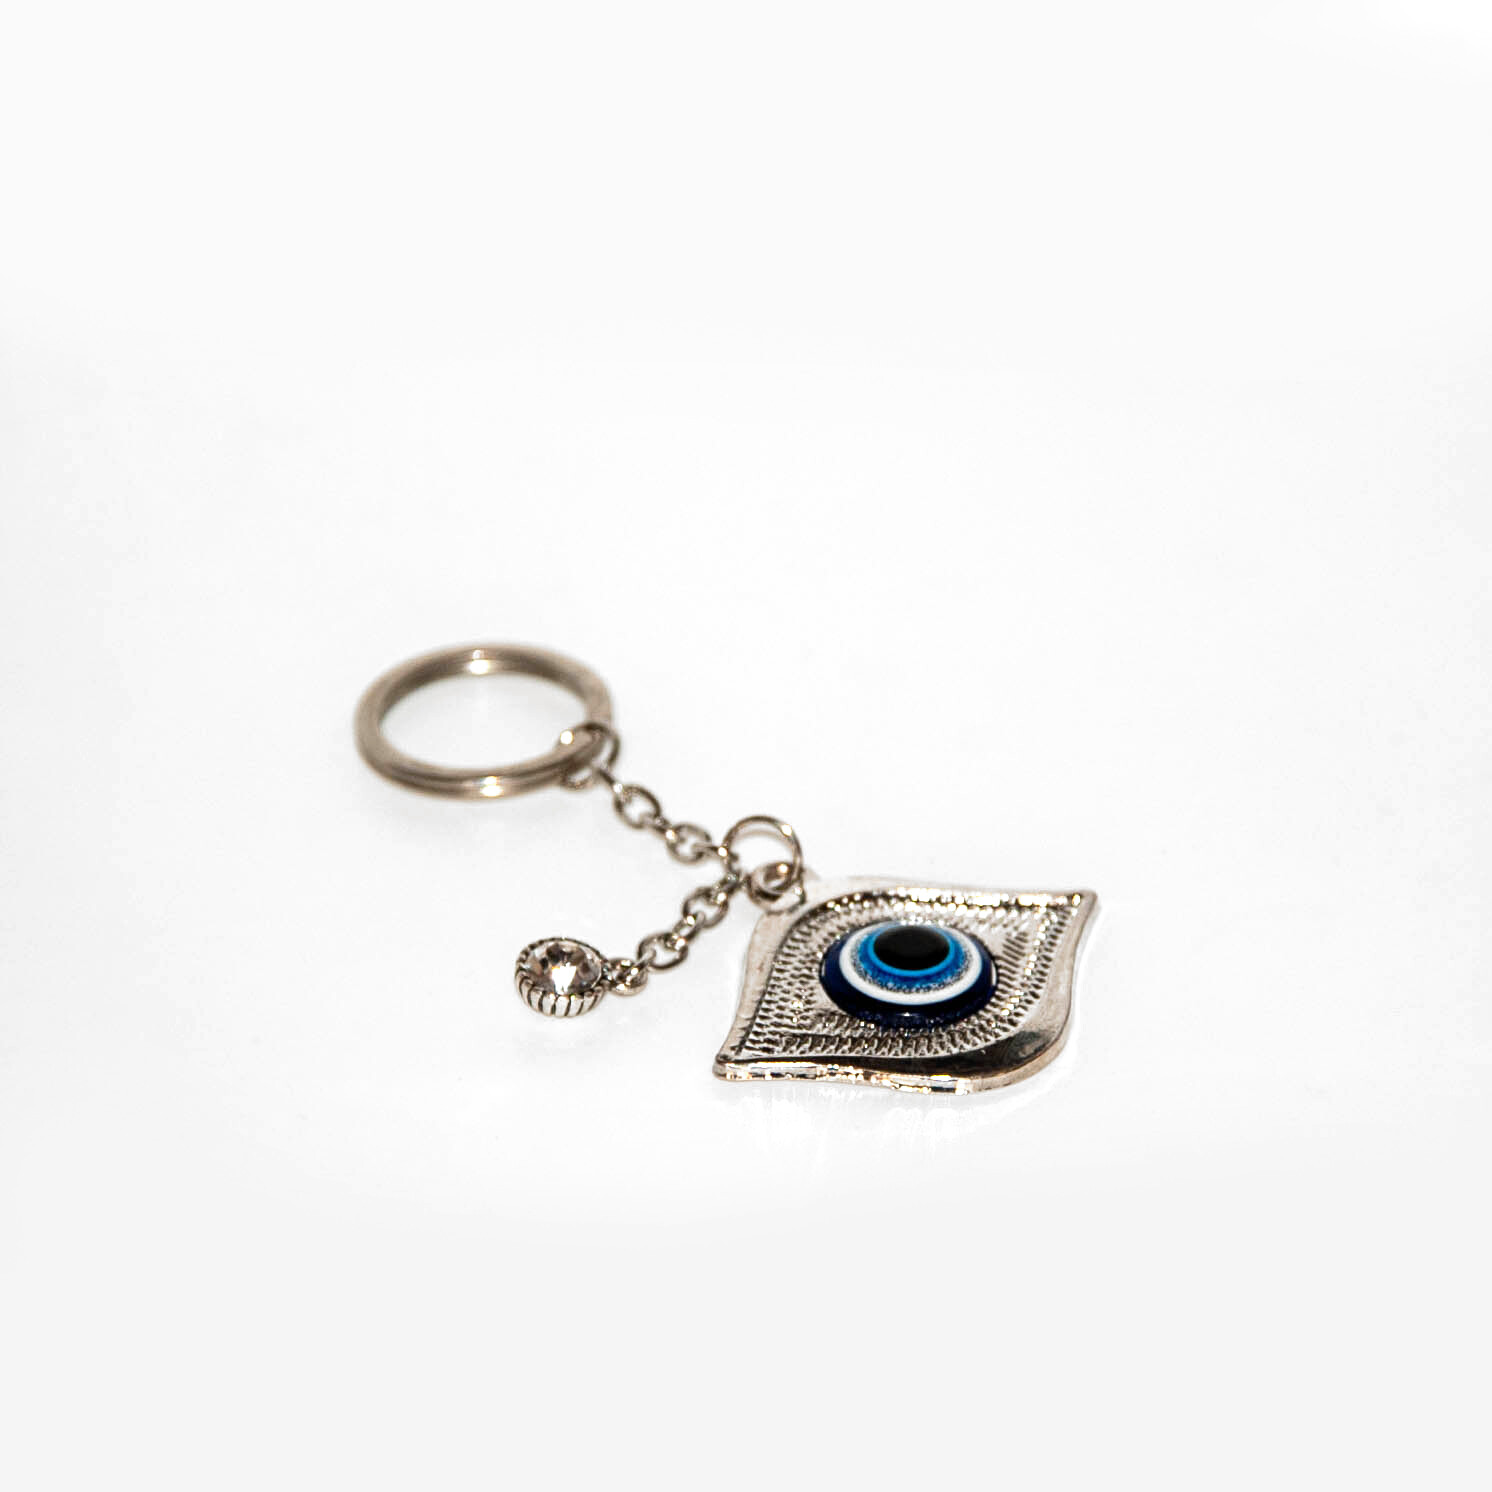 Evil eye key chain